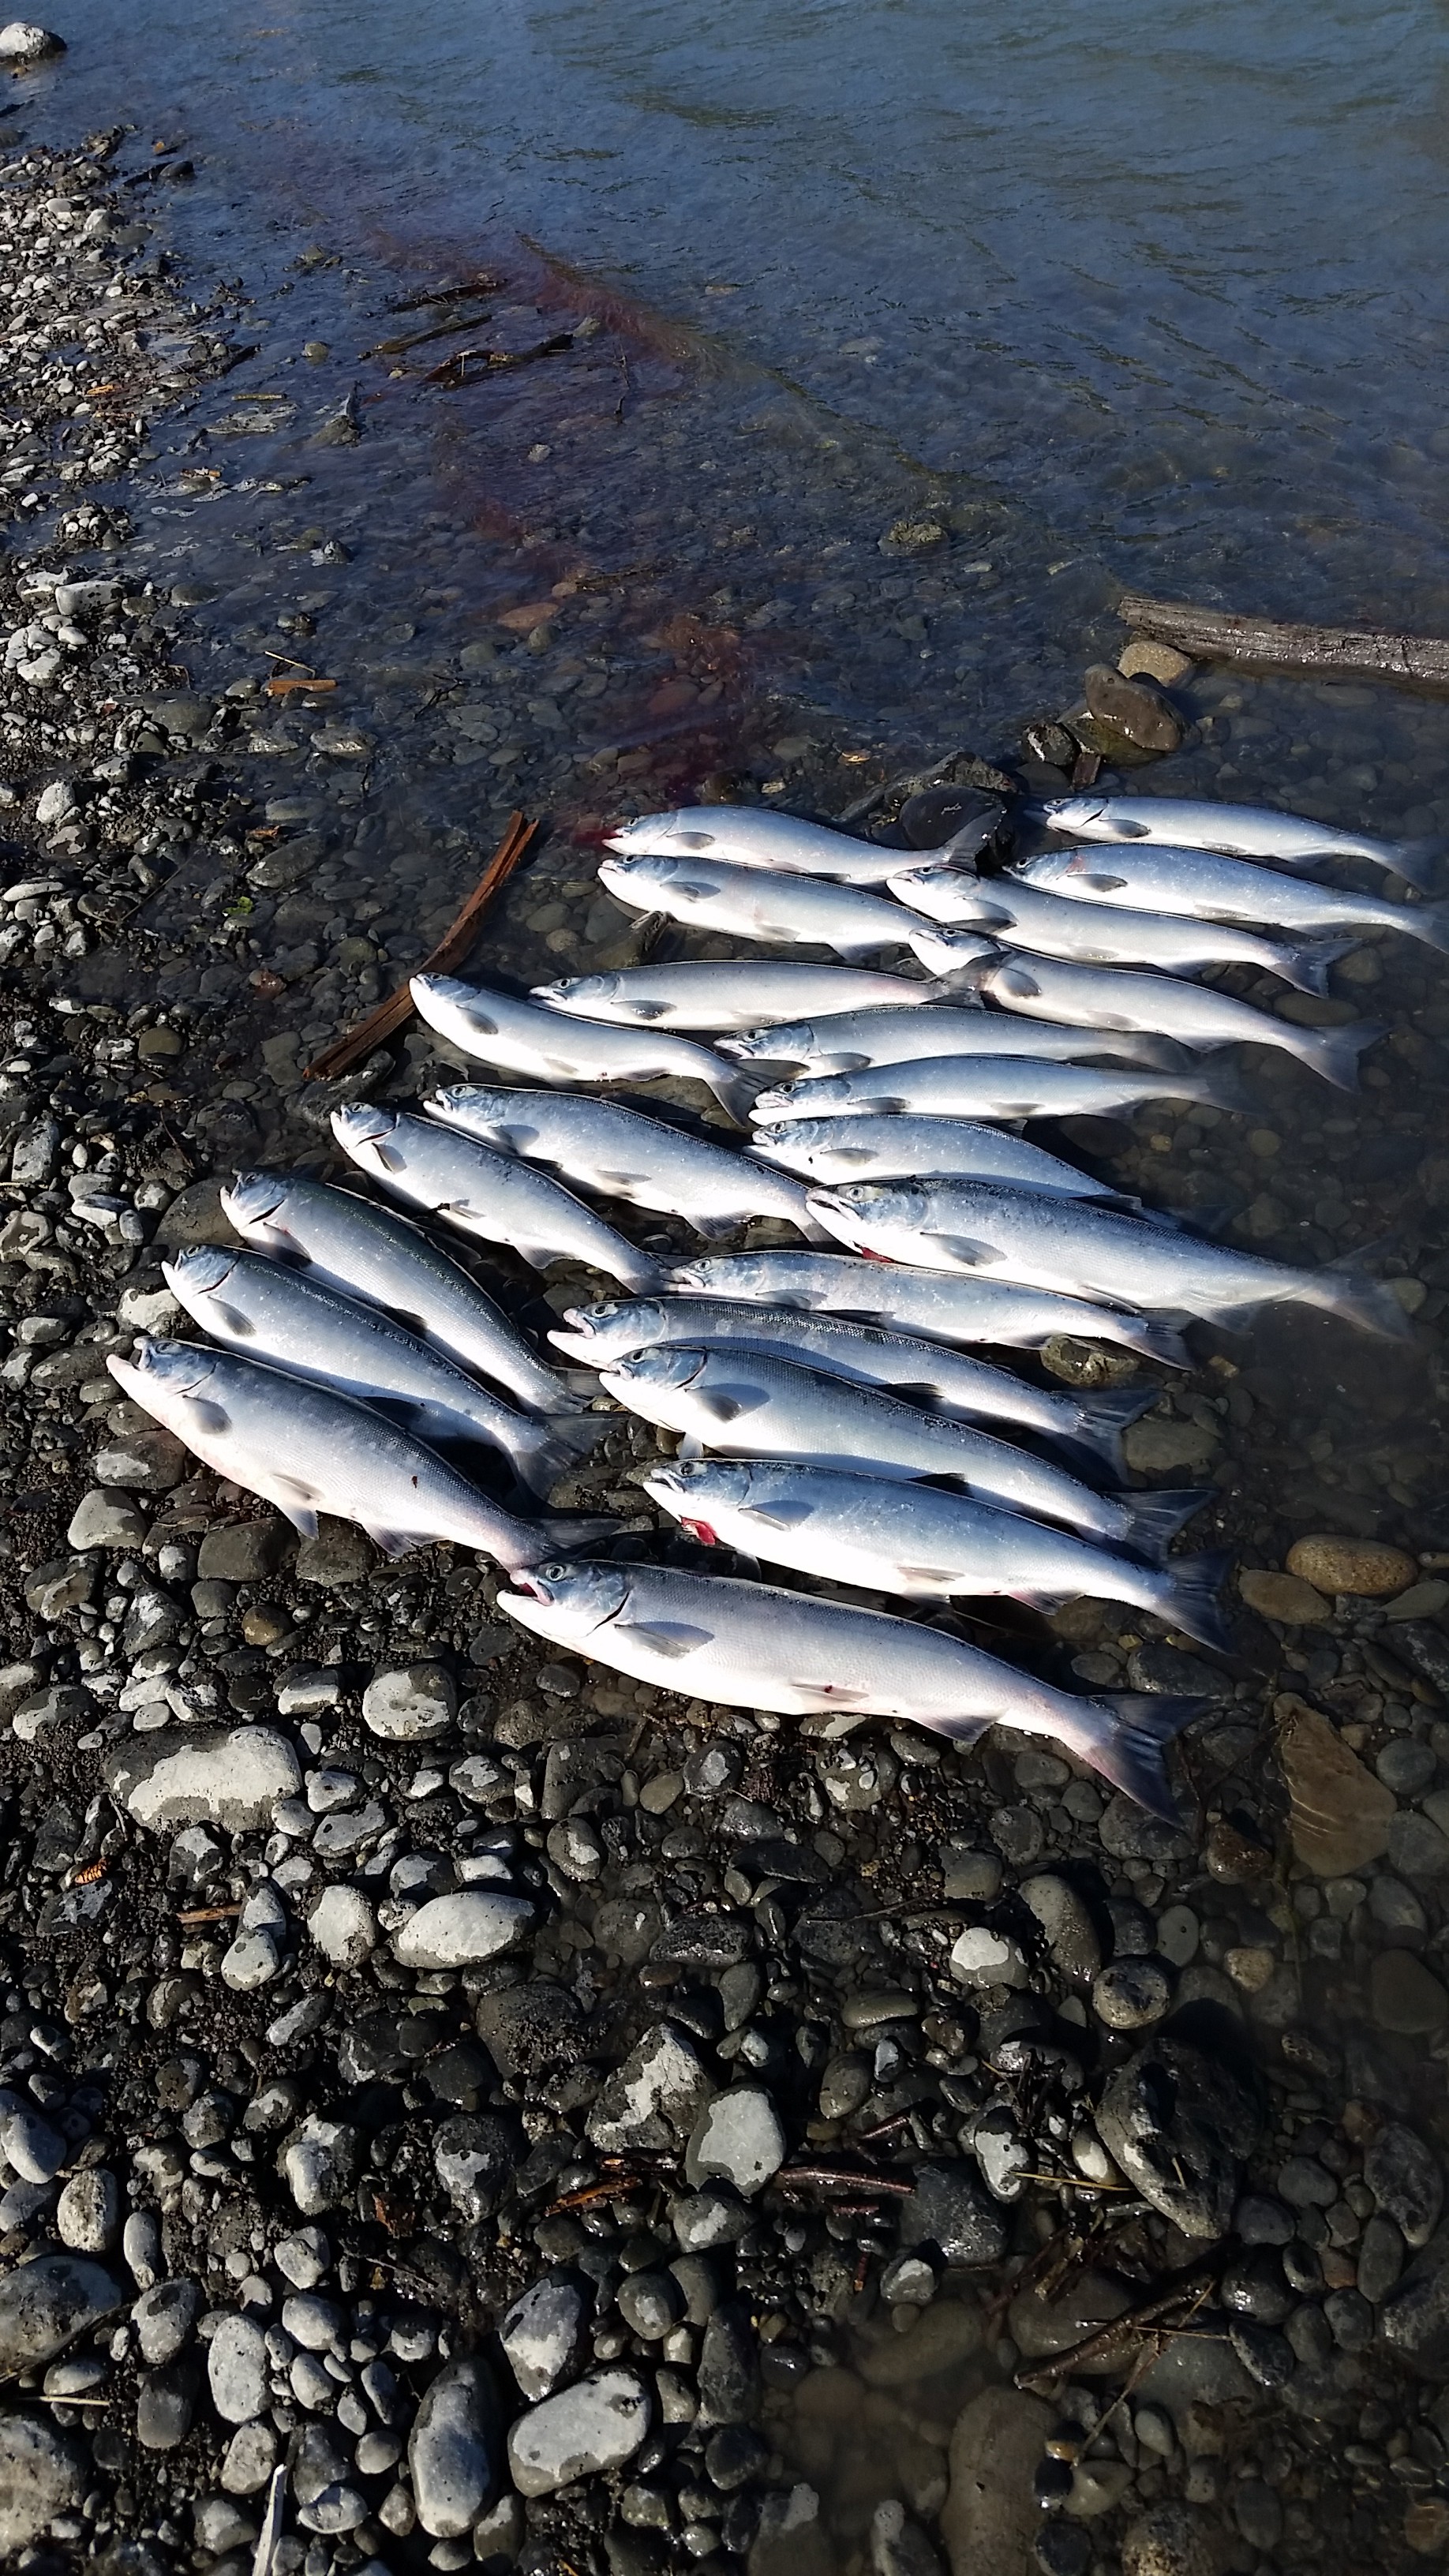 Alaskan Sockeye Salmon Fishing 101 - Alaskan Wild Sockeye Salmon